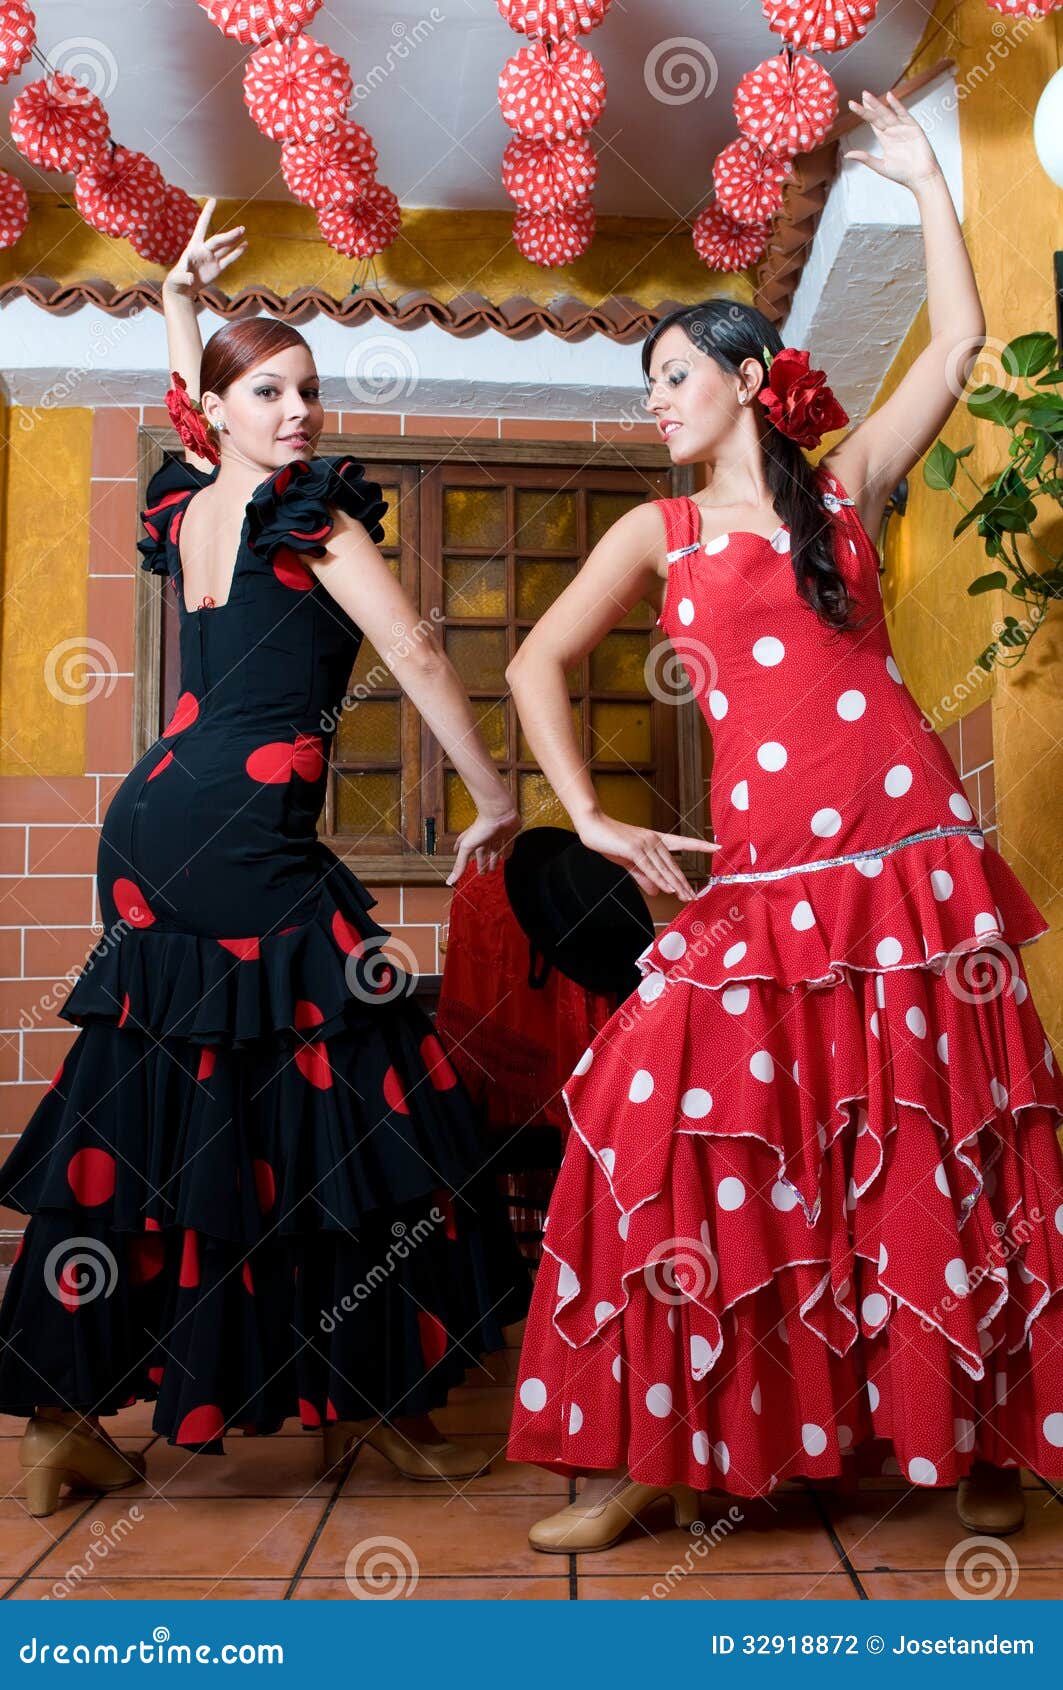 women in traditional flamenco dresses dance during the feria de abril on april spain